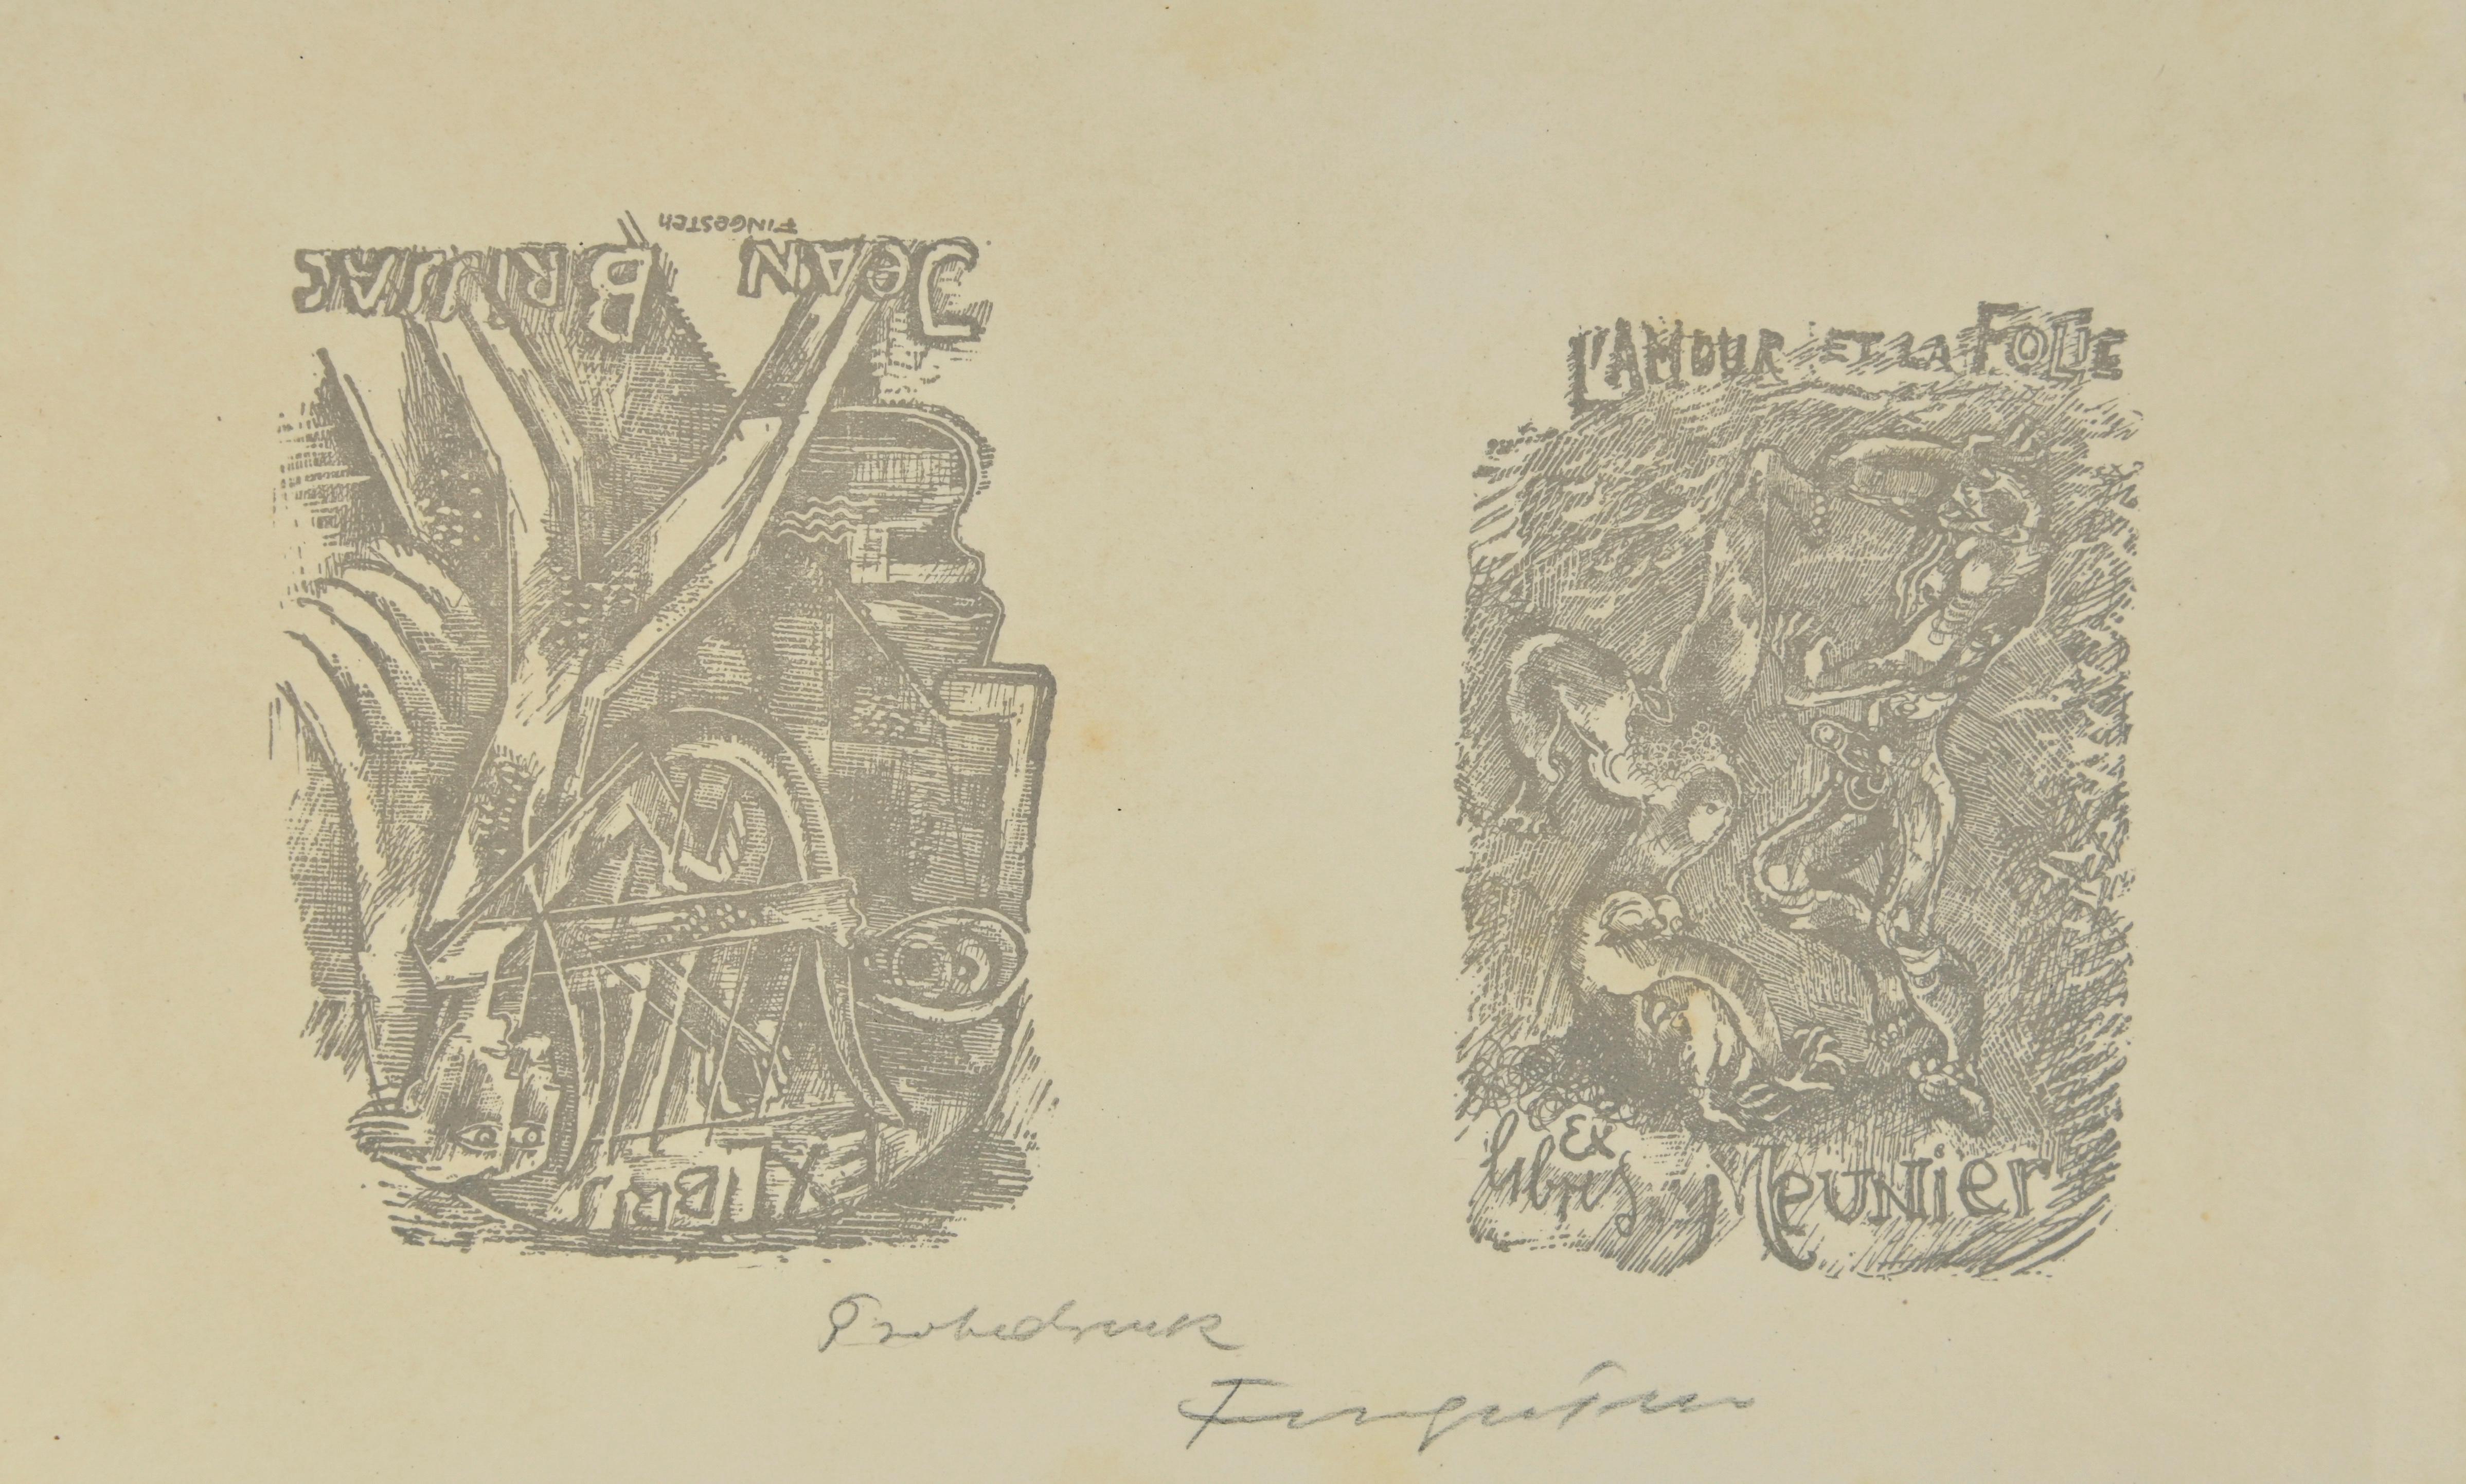  Ex Libris L'Amour et la Folie – Ex Libris – Holzschnitt von Michel Fingesten – 1930er Jahre